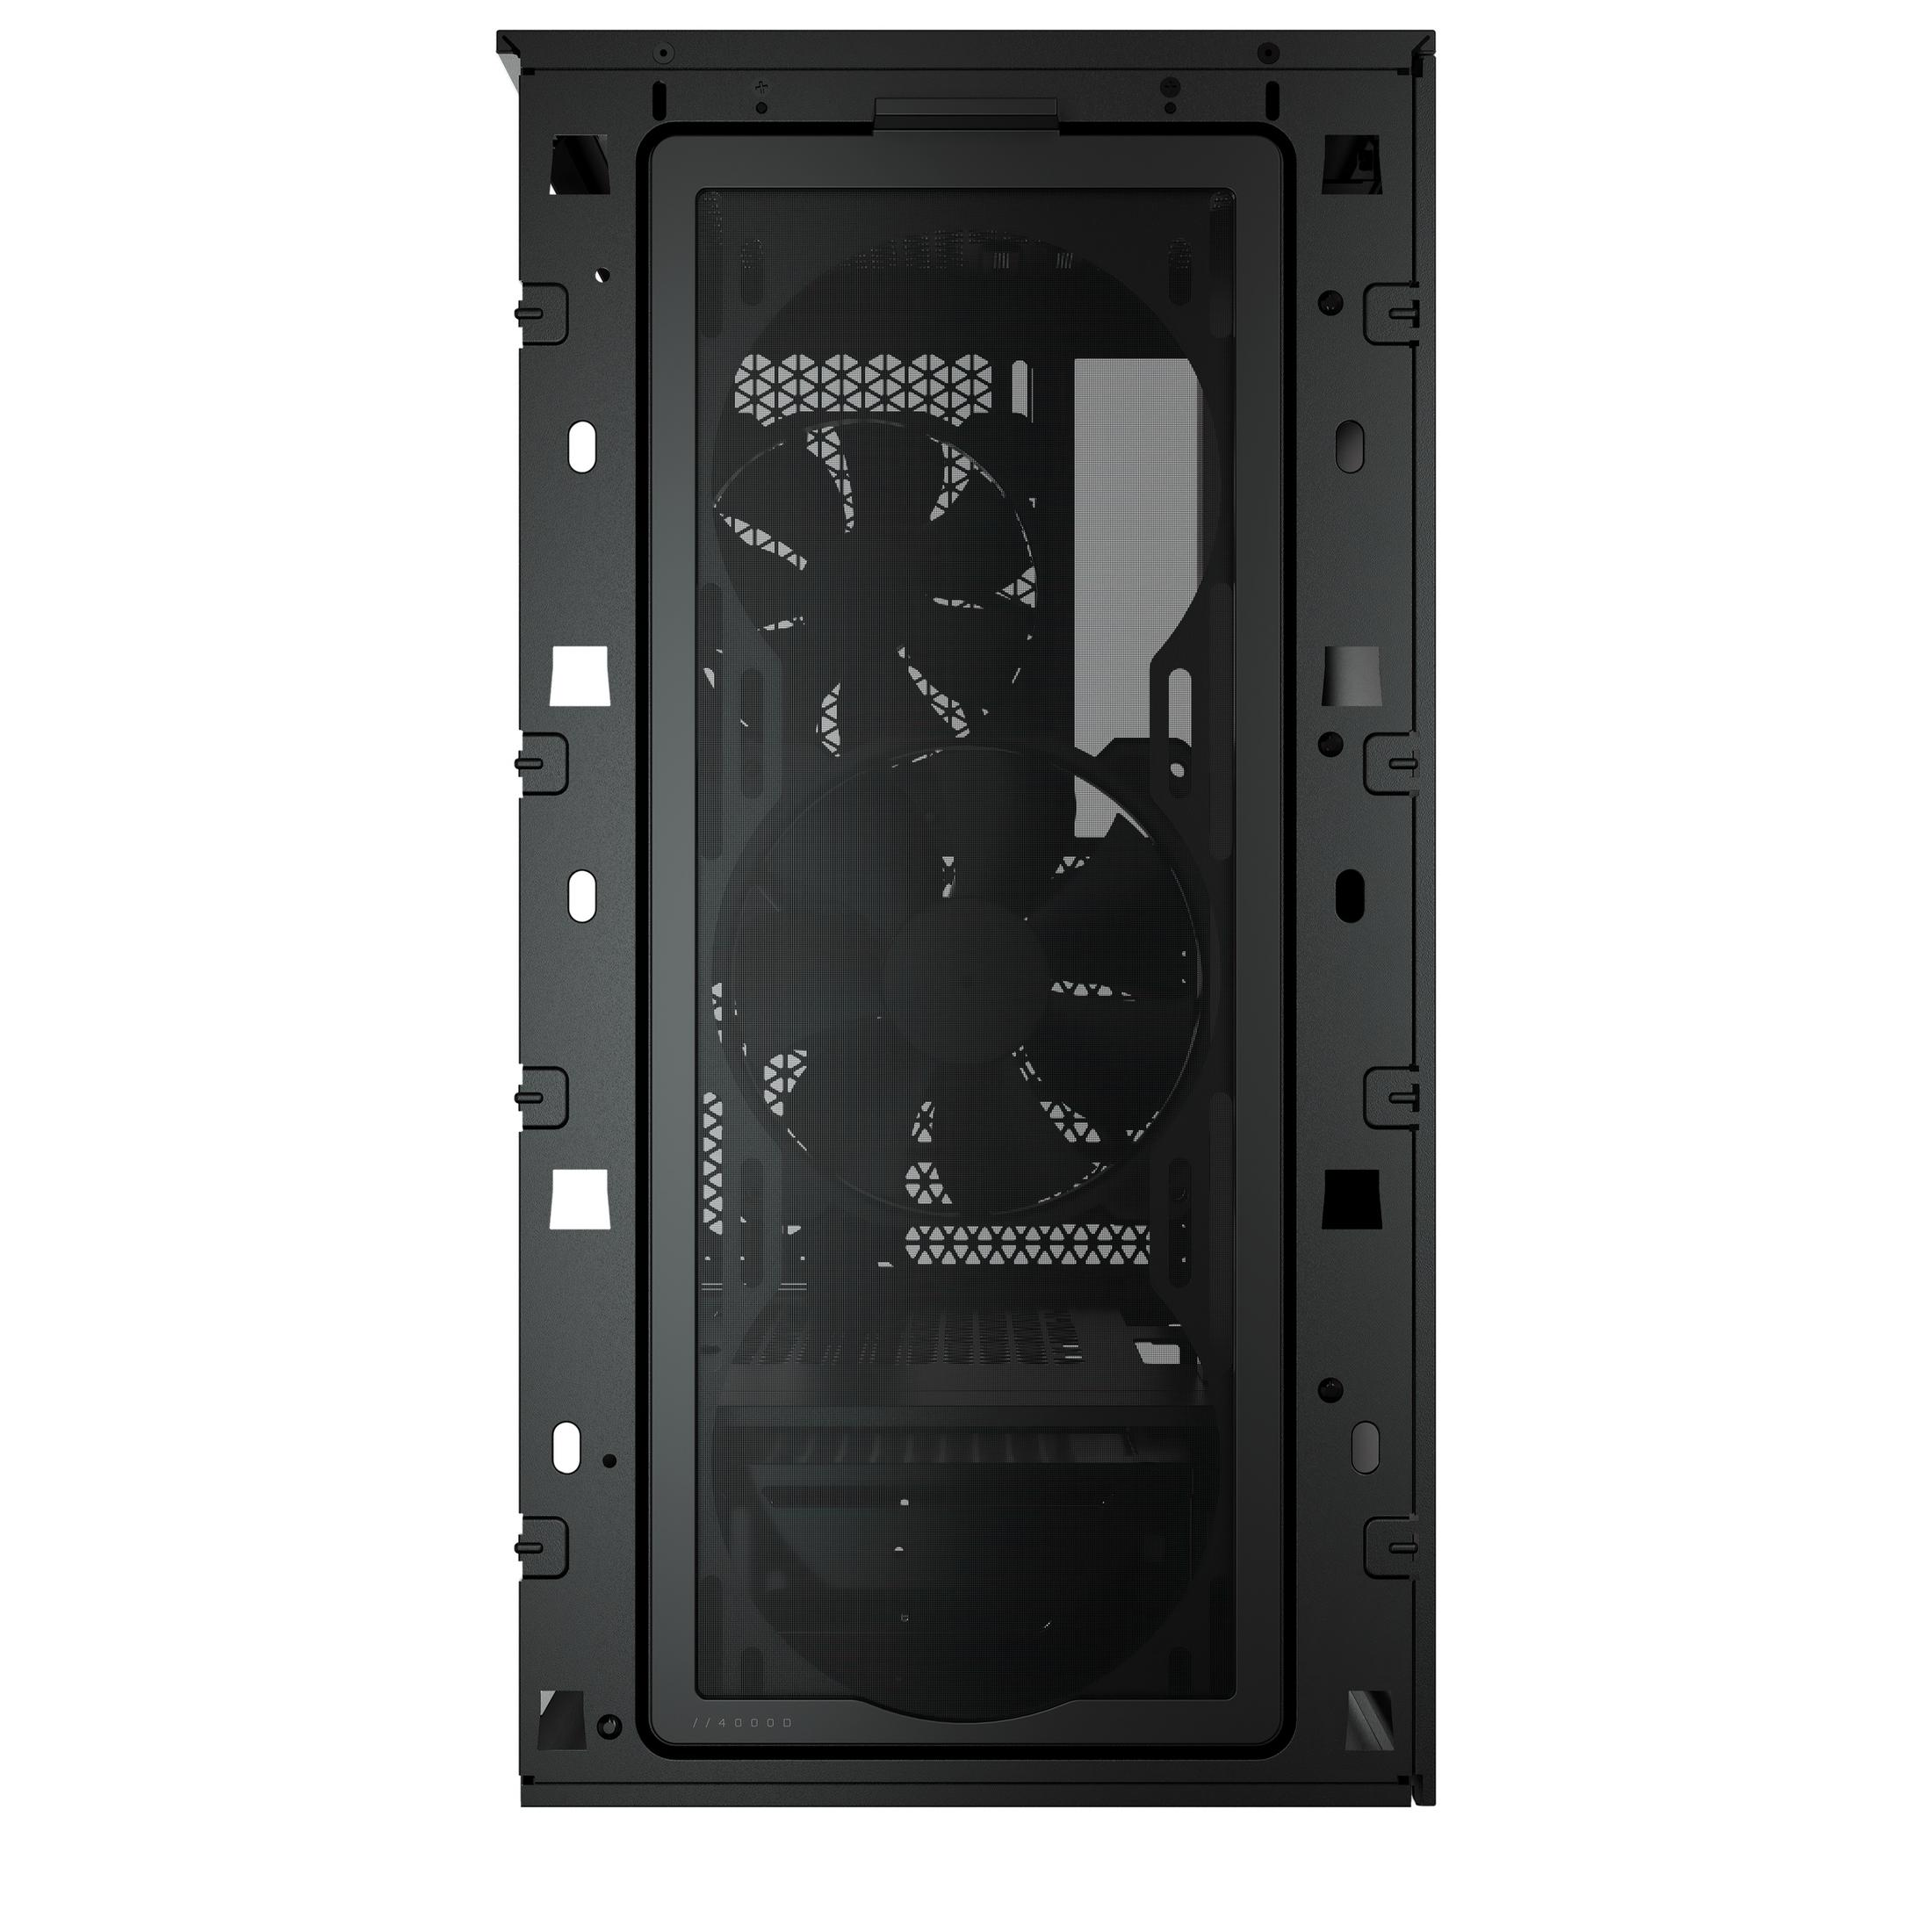 Schwarz AIRFLOW PC-Gehäuse, BLACK TG CORSAIR CC-9011200-WW 4000D